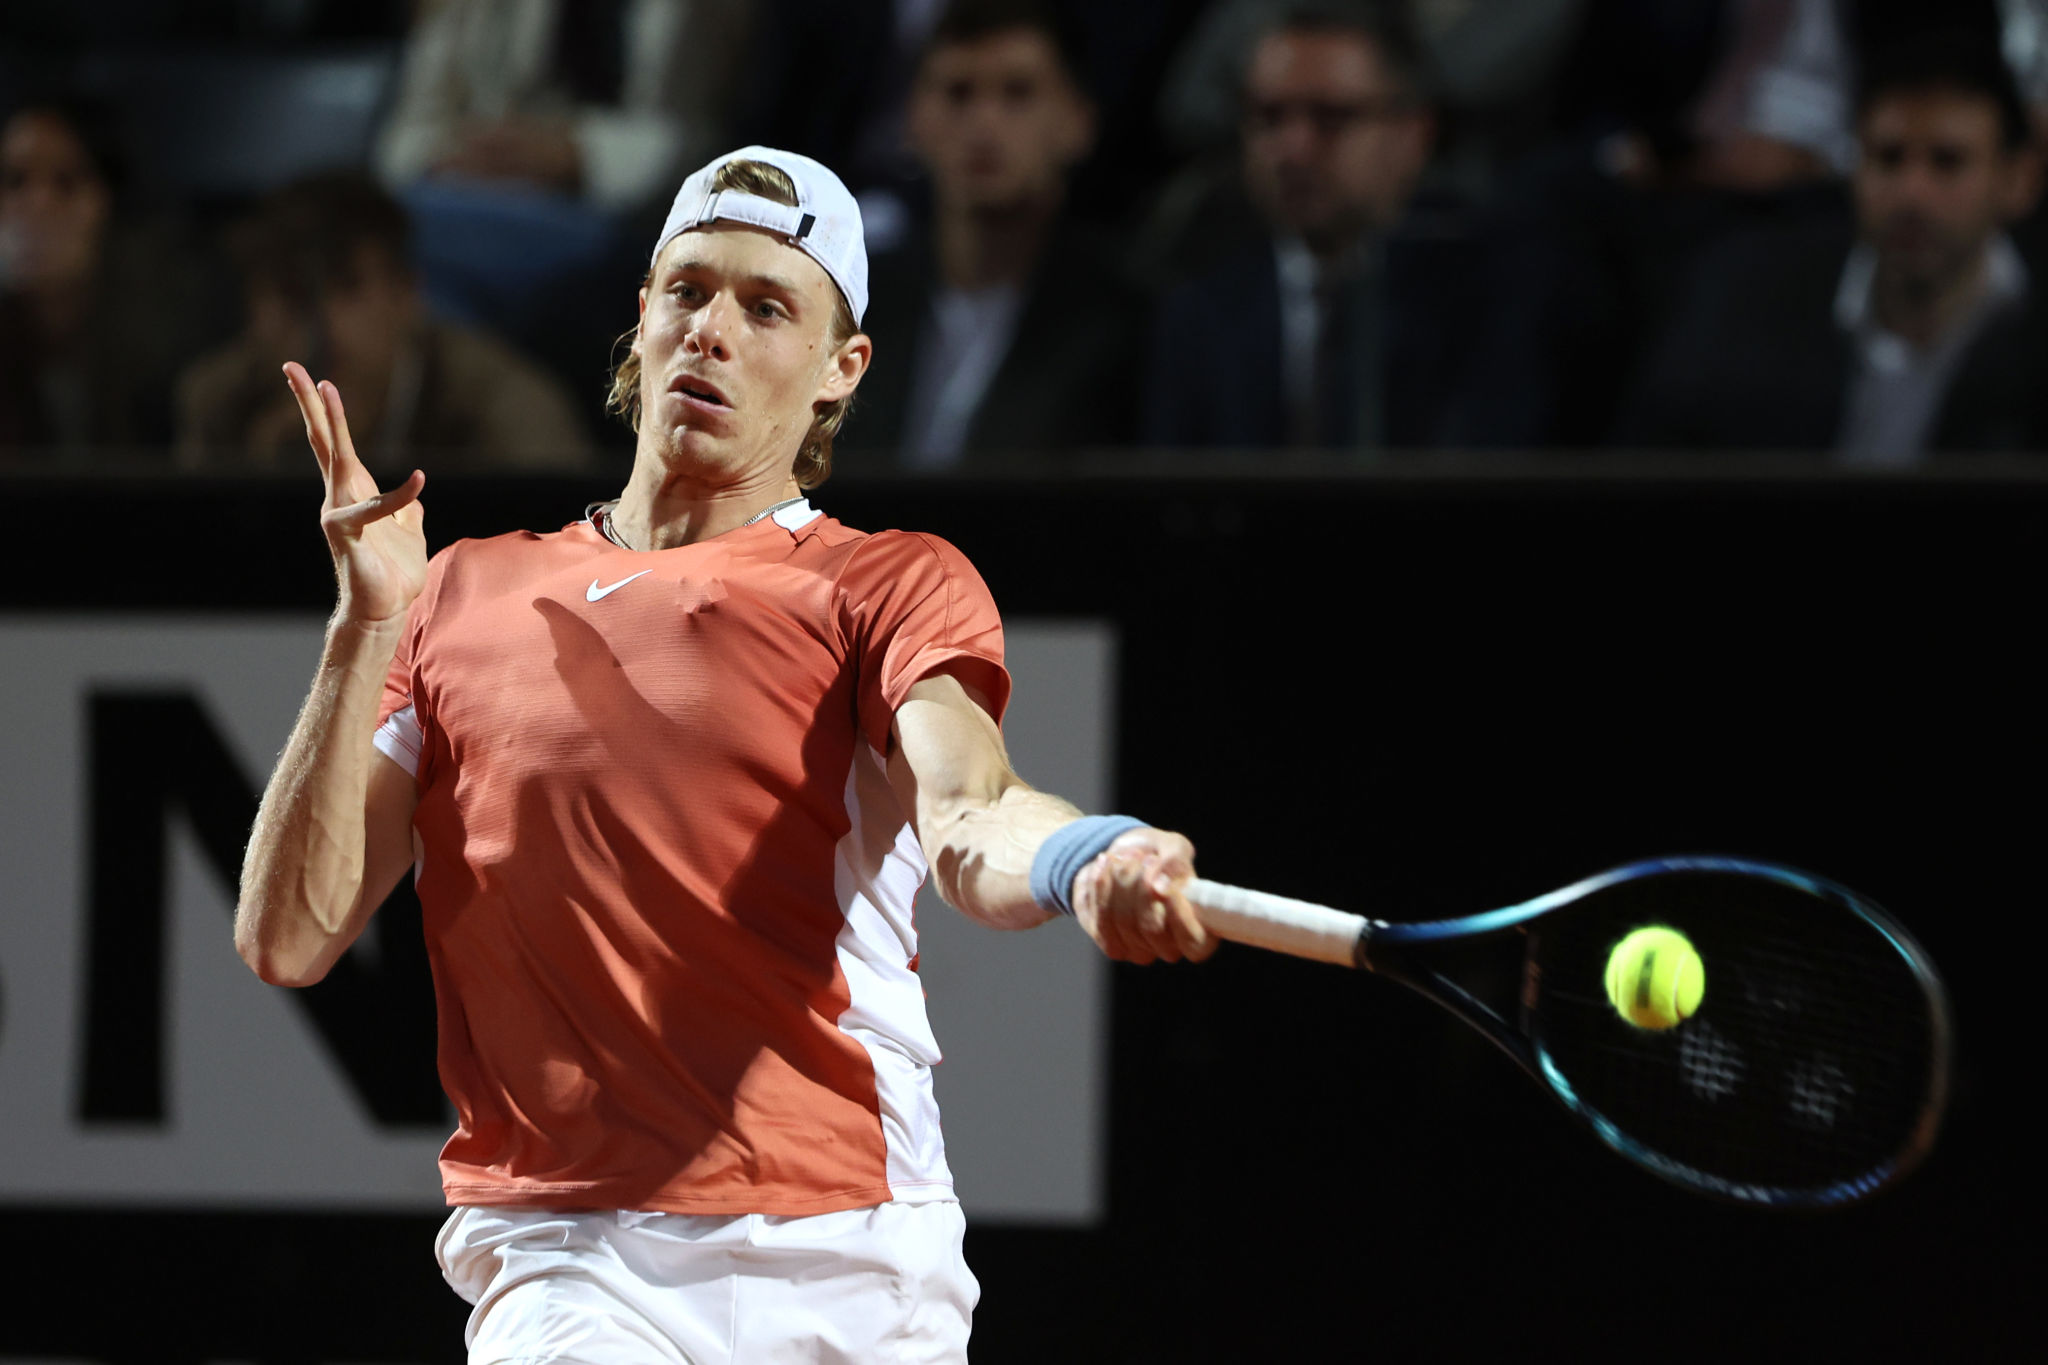 Italian Open LIVE: Denis Shapovalov clinches upset victory over Rafael Nadal in three sets to move into Italian Open quarterfinals